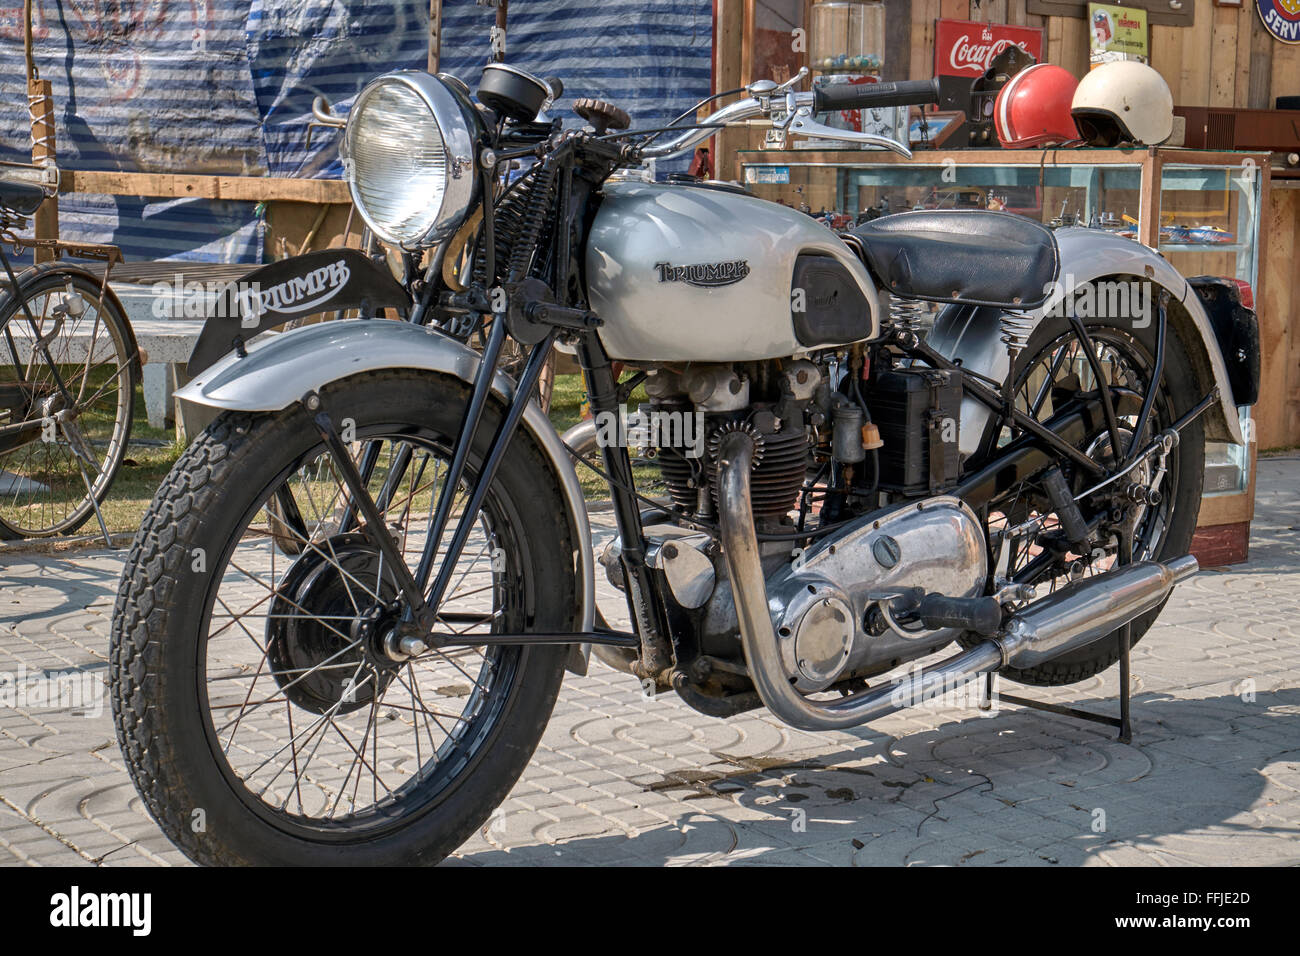 Vintage triumph motorcycle -Fotos und -Bildmaterial in hoher Auflösung –  Alamy